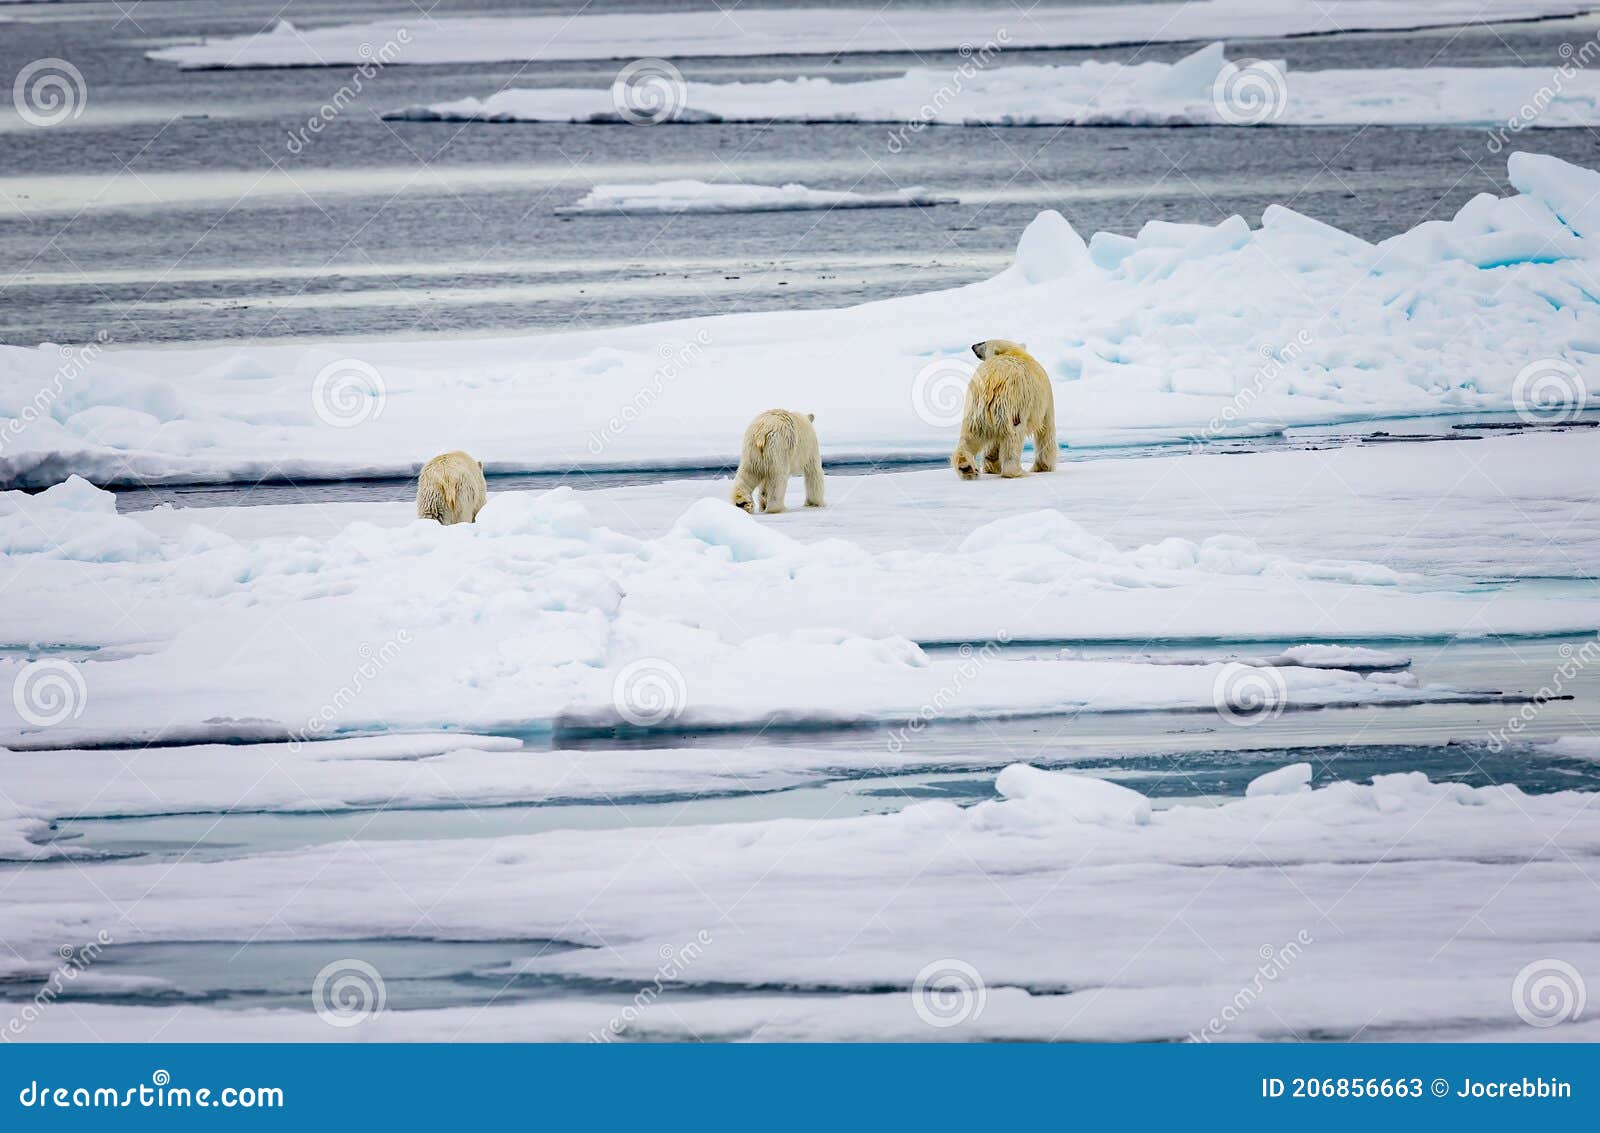 https://thumbs.dreamstime.com/z/polar-bear-family-walks-away-over-thin-ice-floe-arctic-206856663.jpg